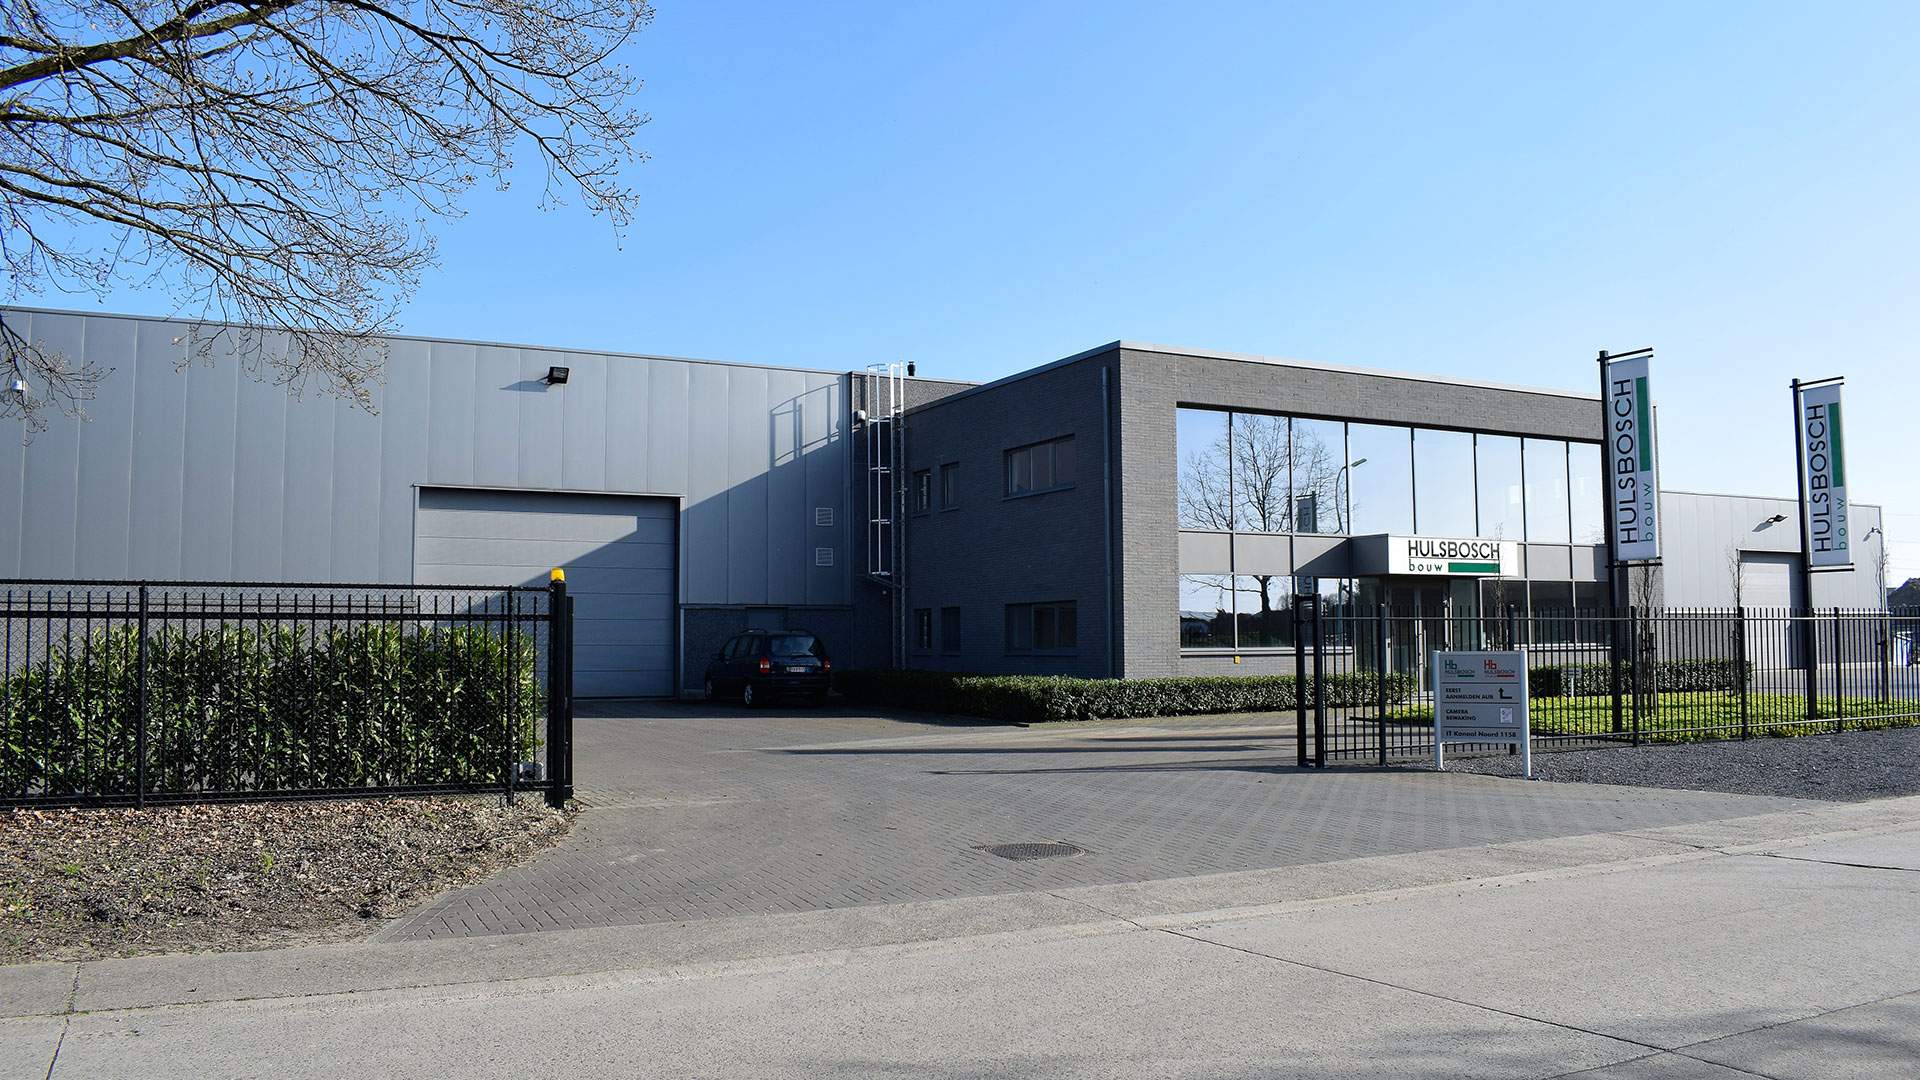 Hulsbosch Bouwbedrijf uit Limburg